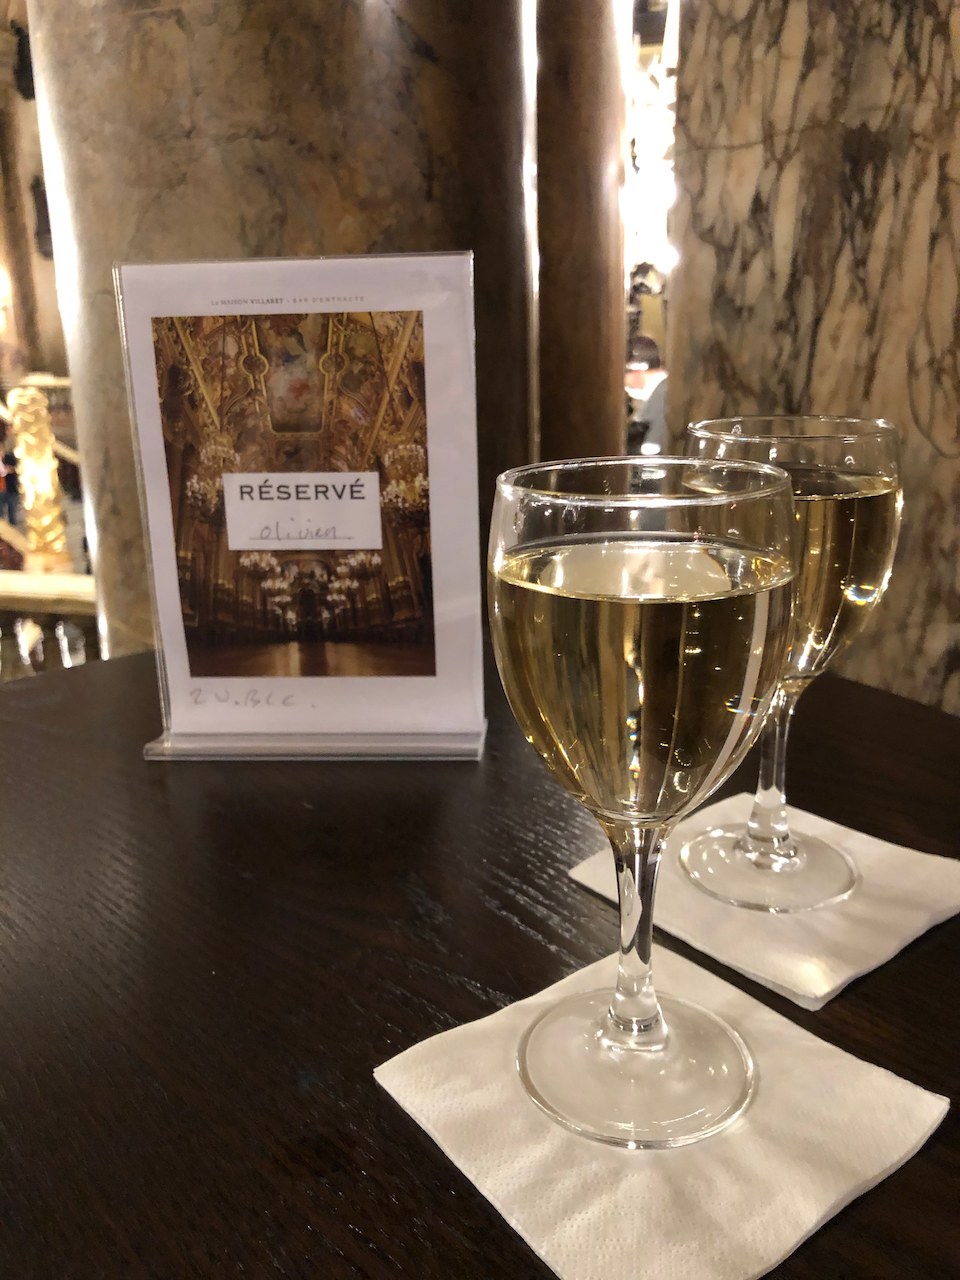 Having champagne at the opera - Paris - France